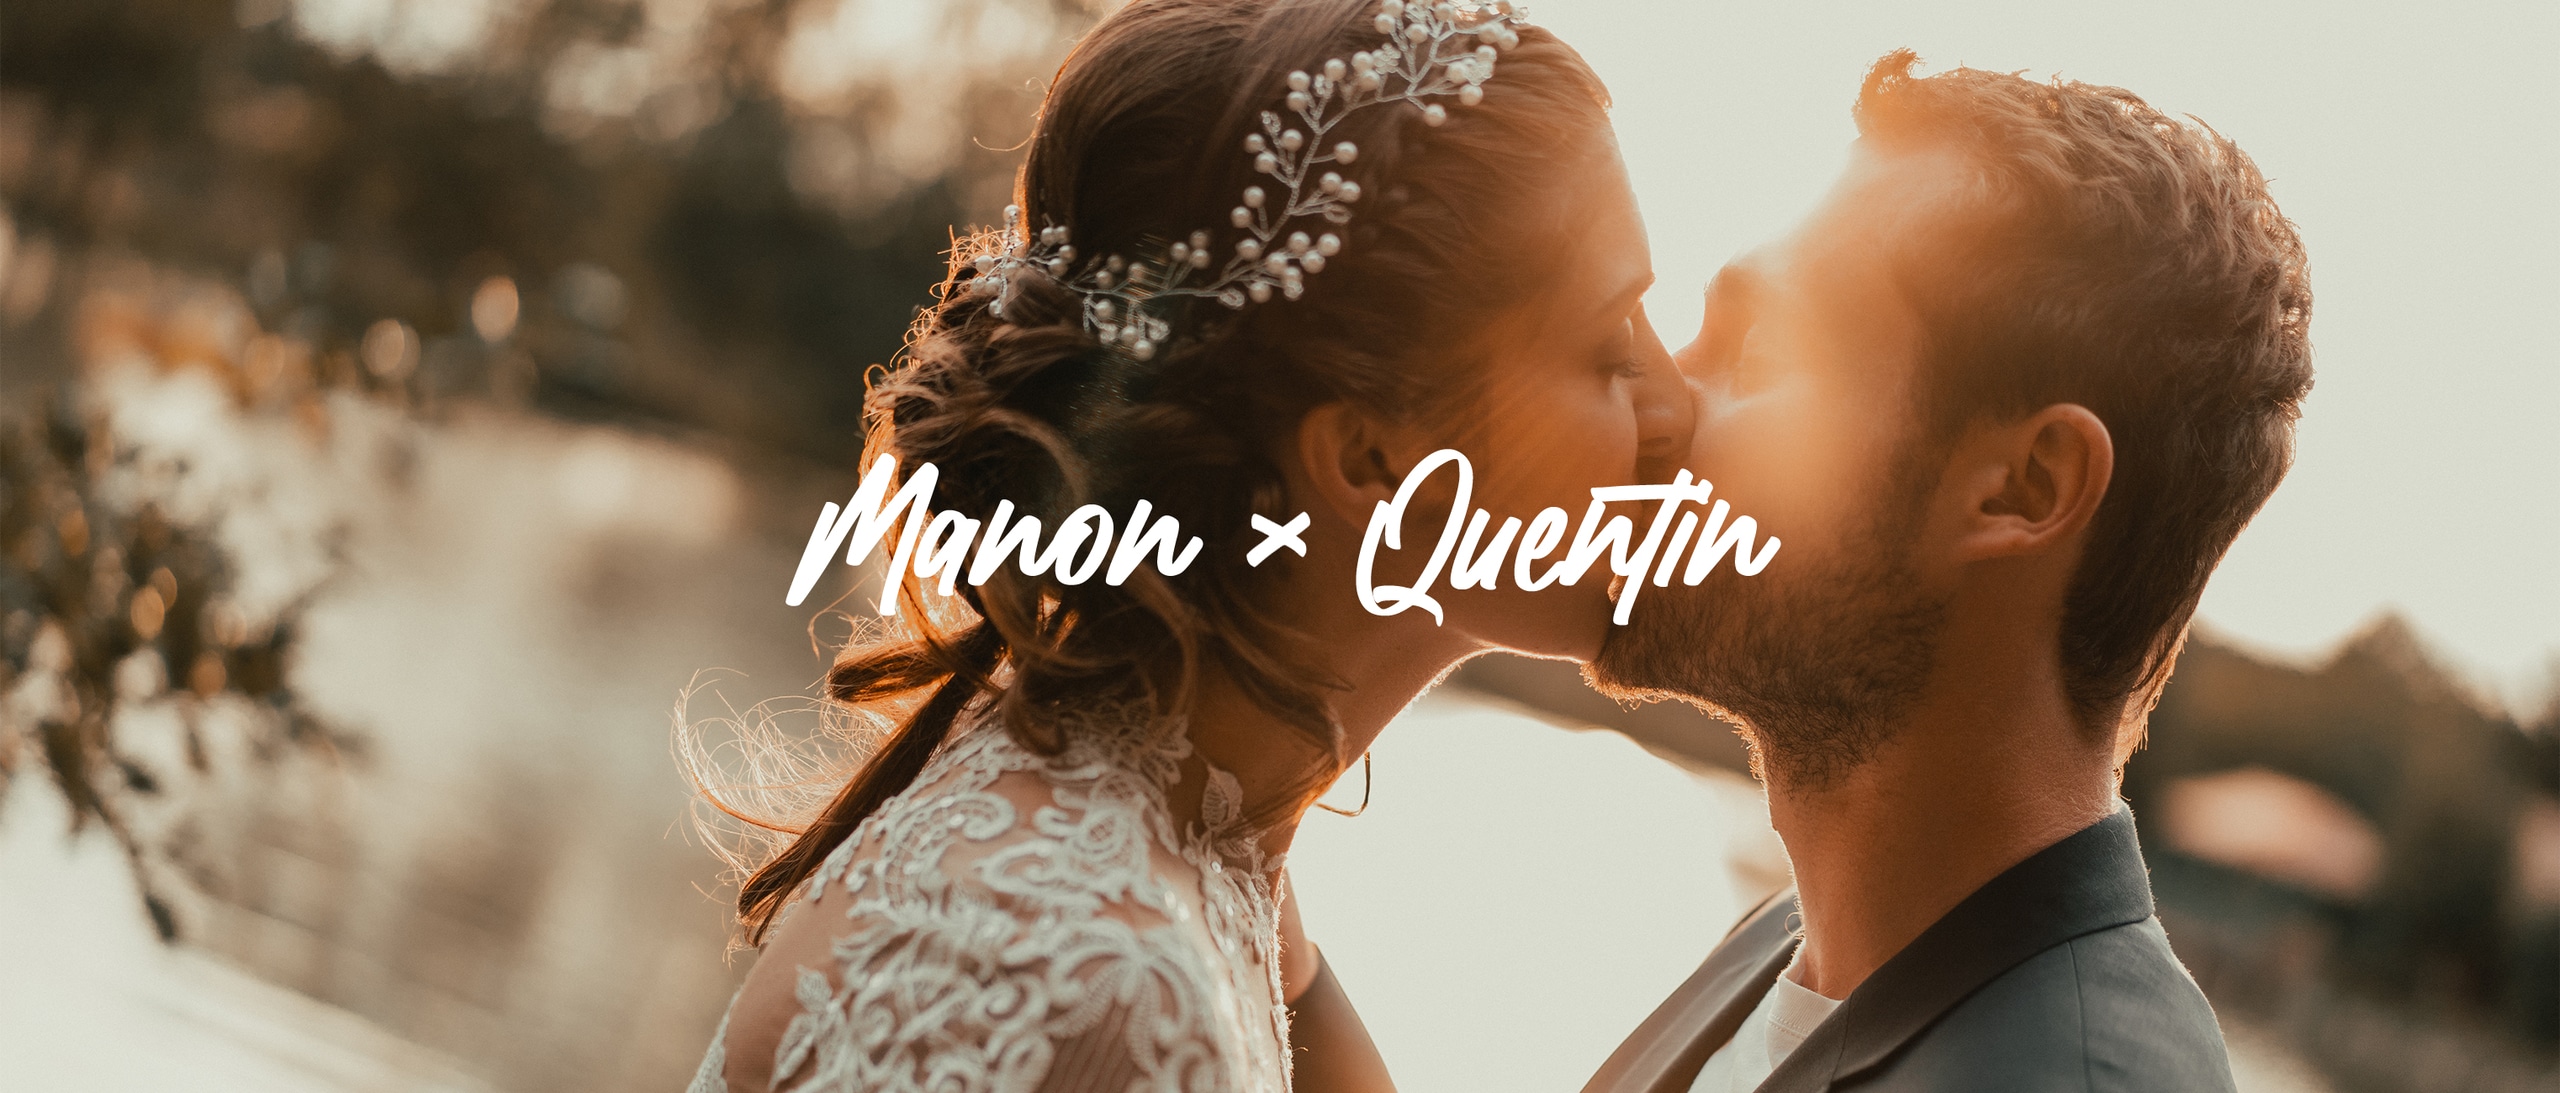 manon-quentin_mariage_preview_02